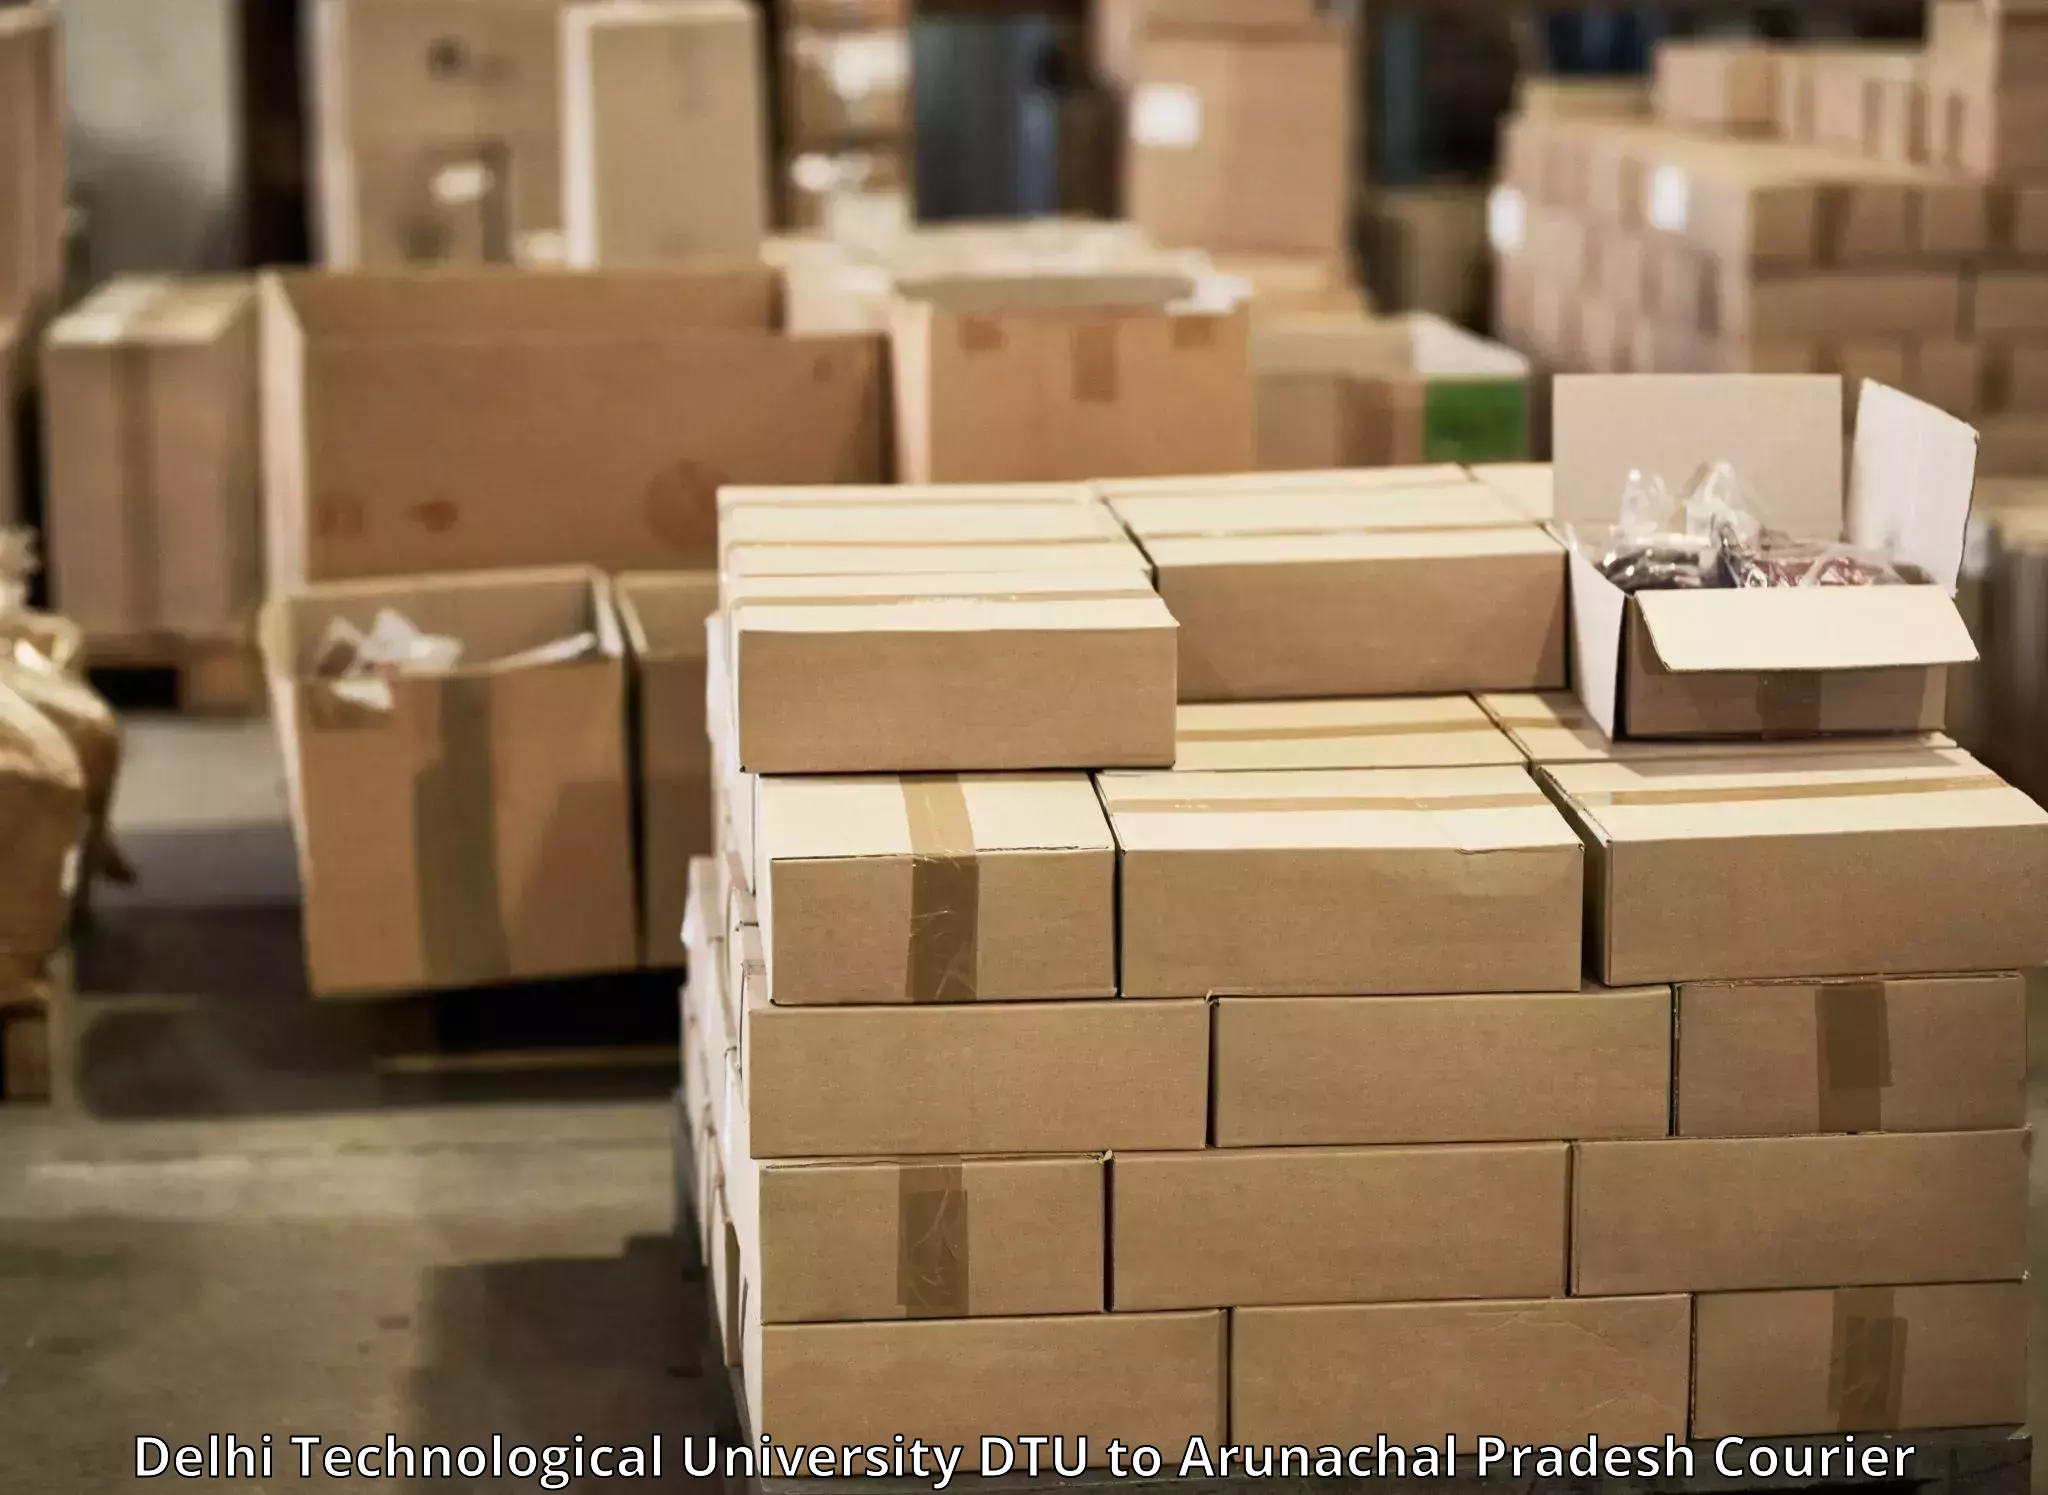 High-capacity parcel service Delhi Technological University DTU to Tezu